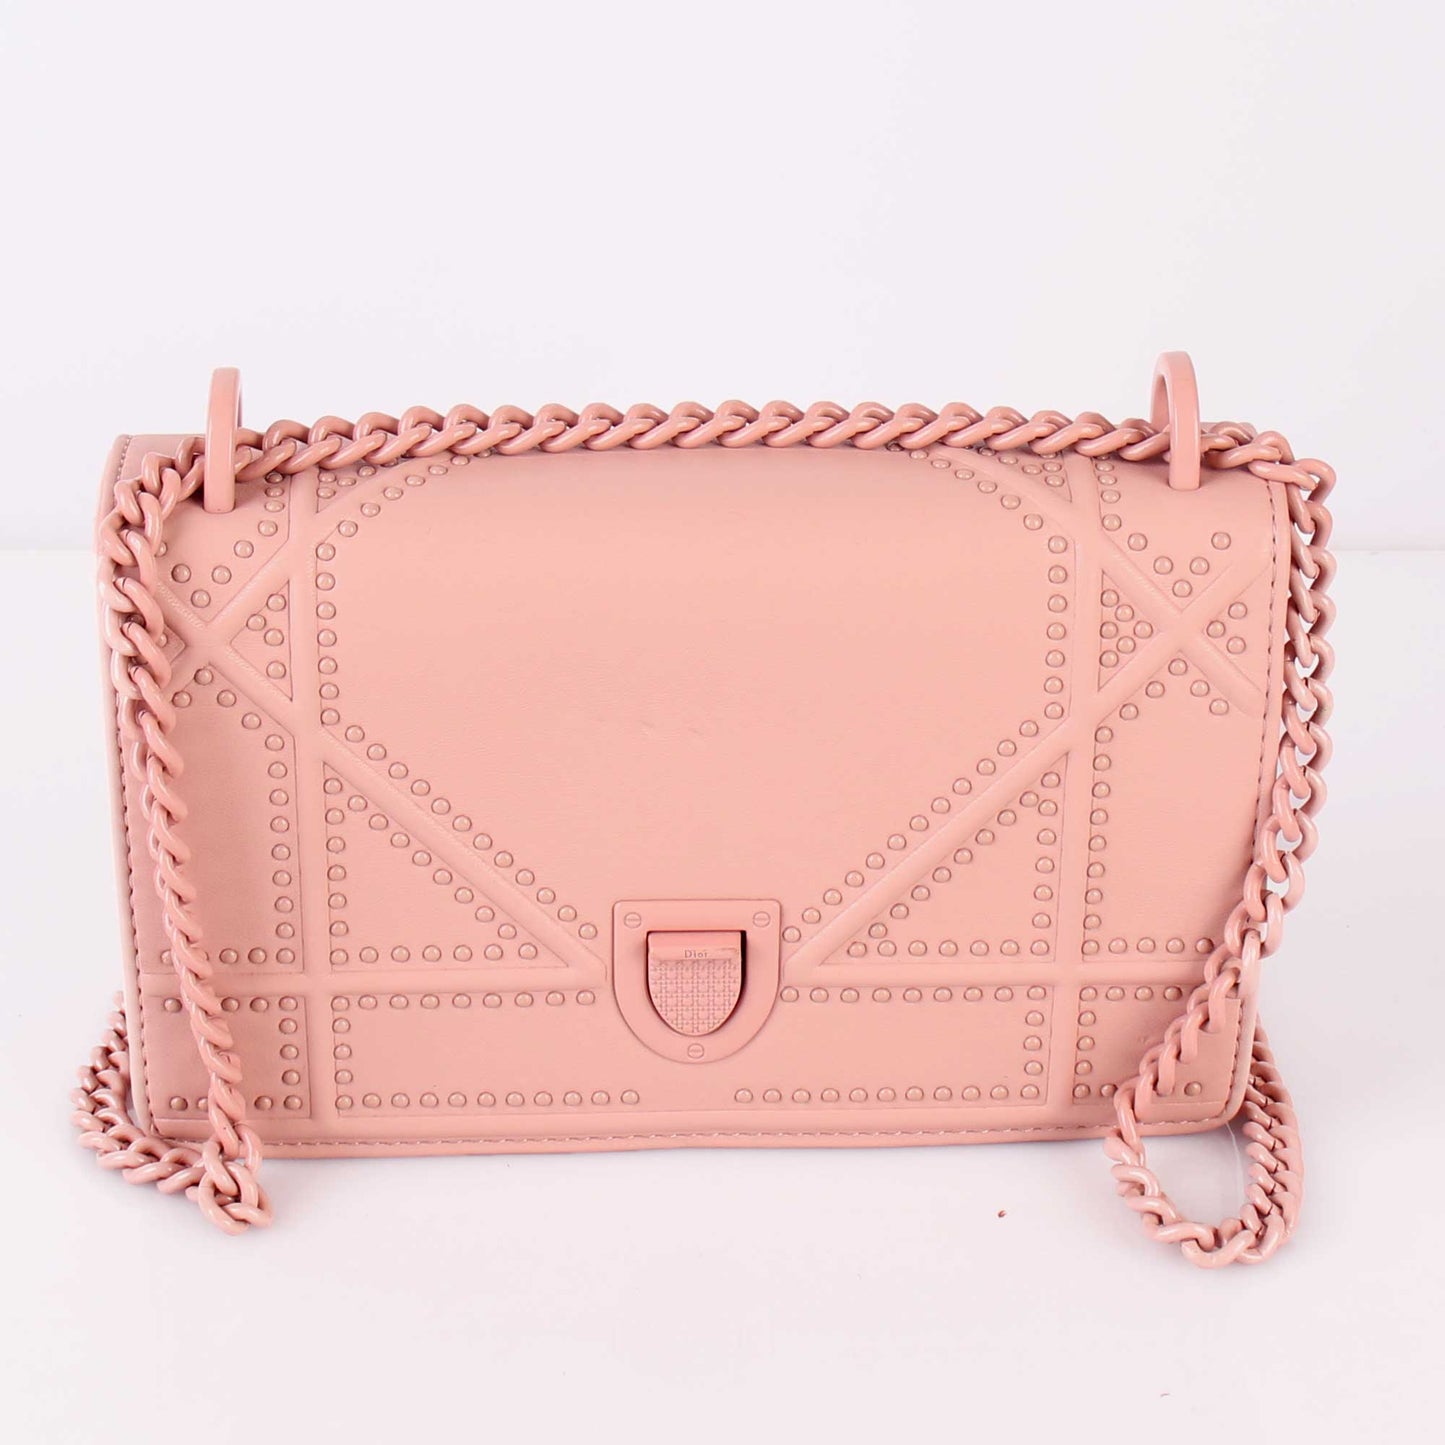 The Pricey Pearls Pink Sling Bag